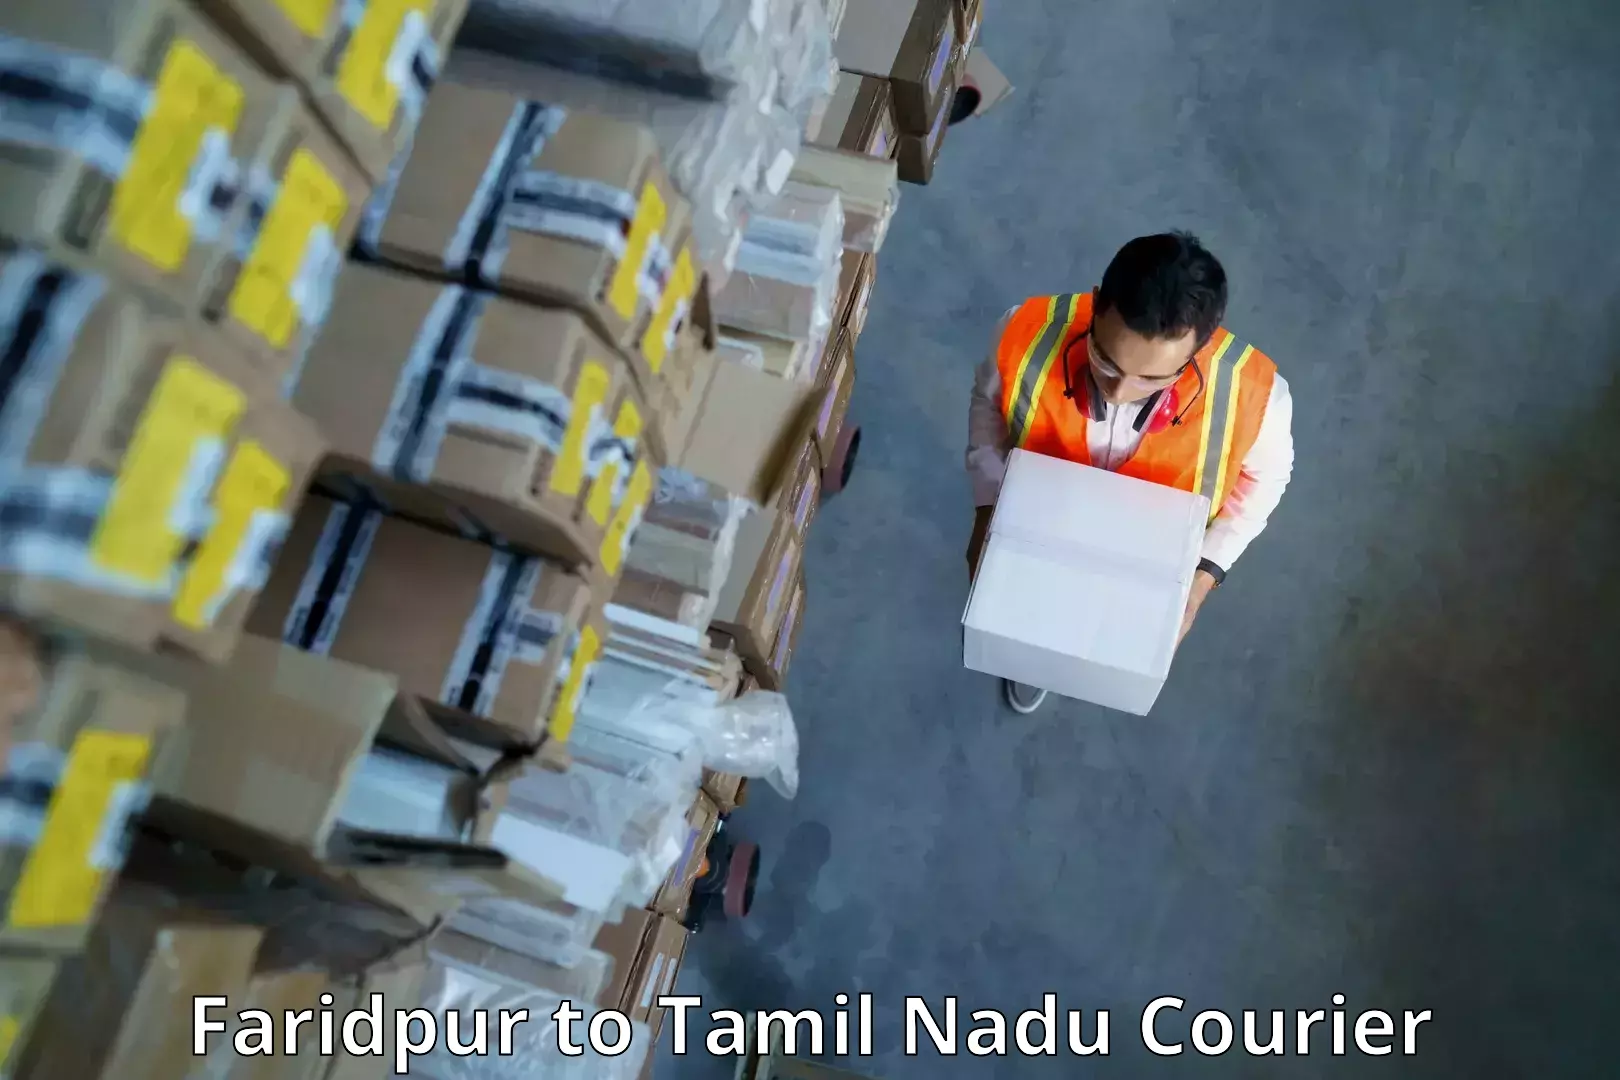 Digital courier platforms Faridpur to Polur